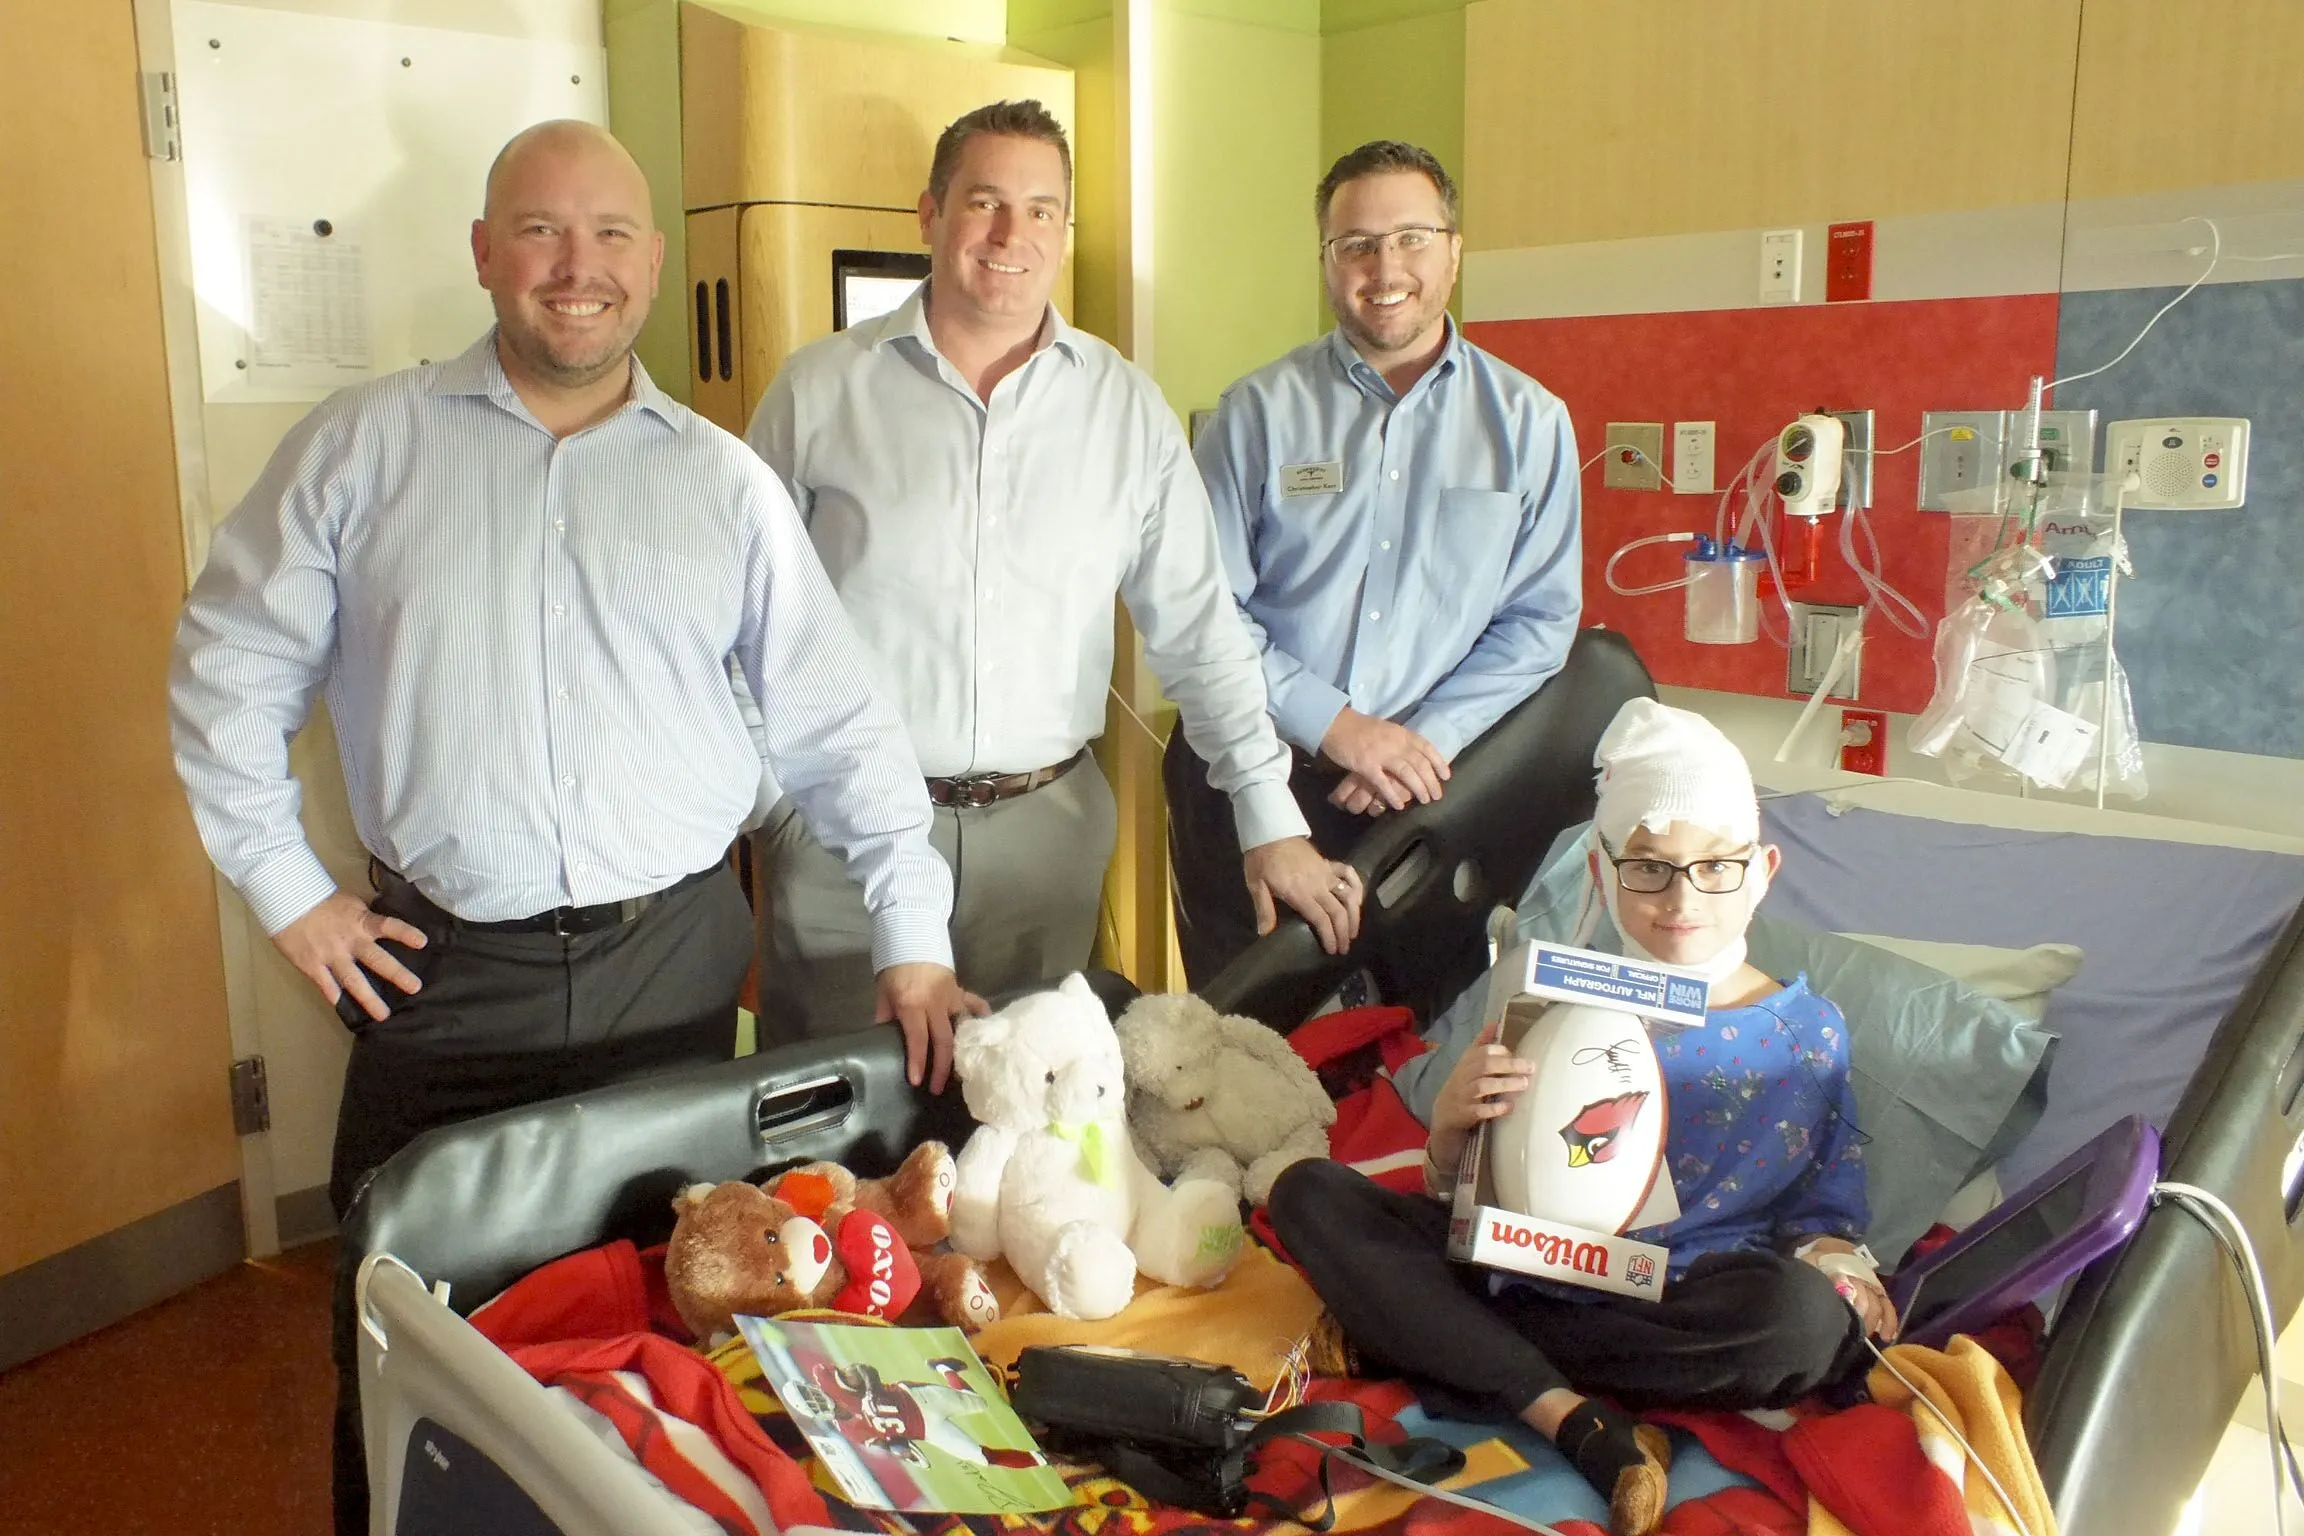 Adam (Earnhardt Hyundai GM), Peter (Rodeo Hyundai GM), and Chris (Marketing Director) at Phoenix Children's Hospital